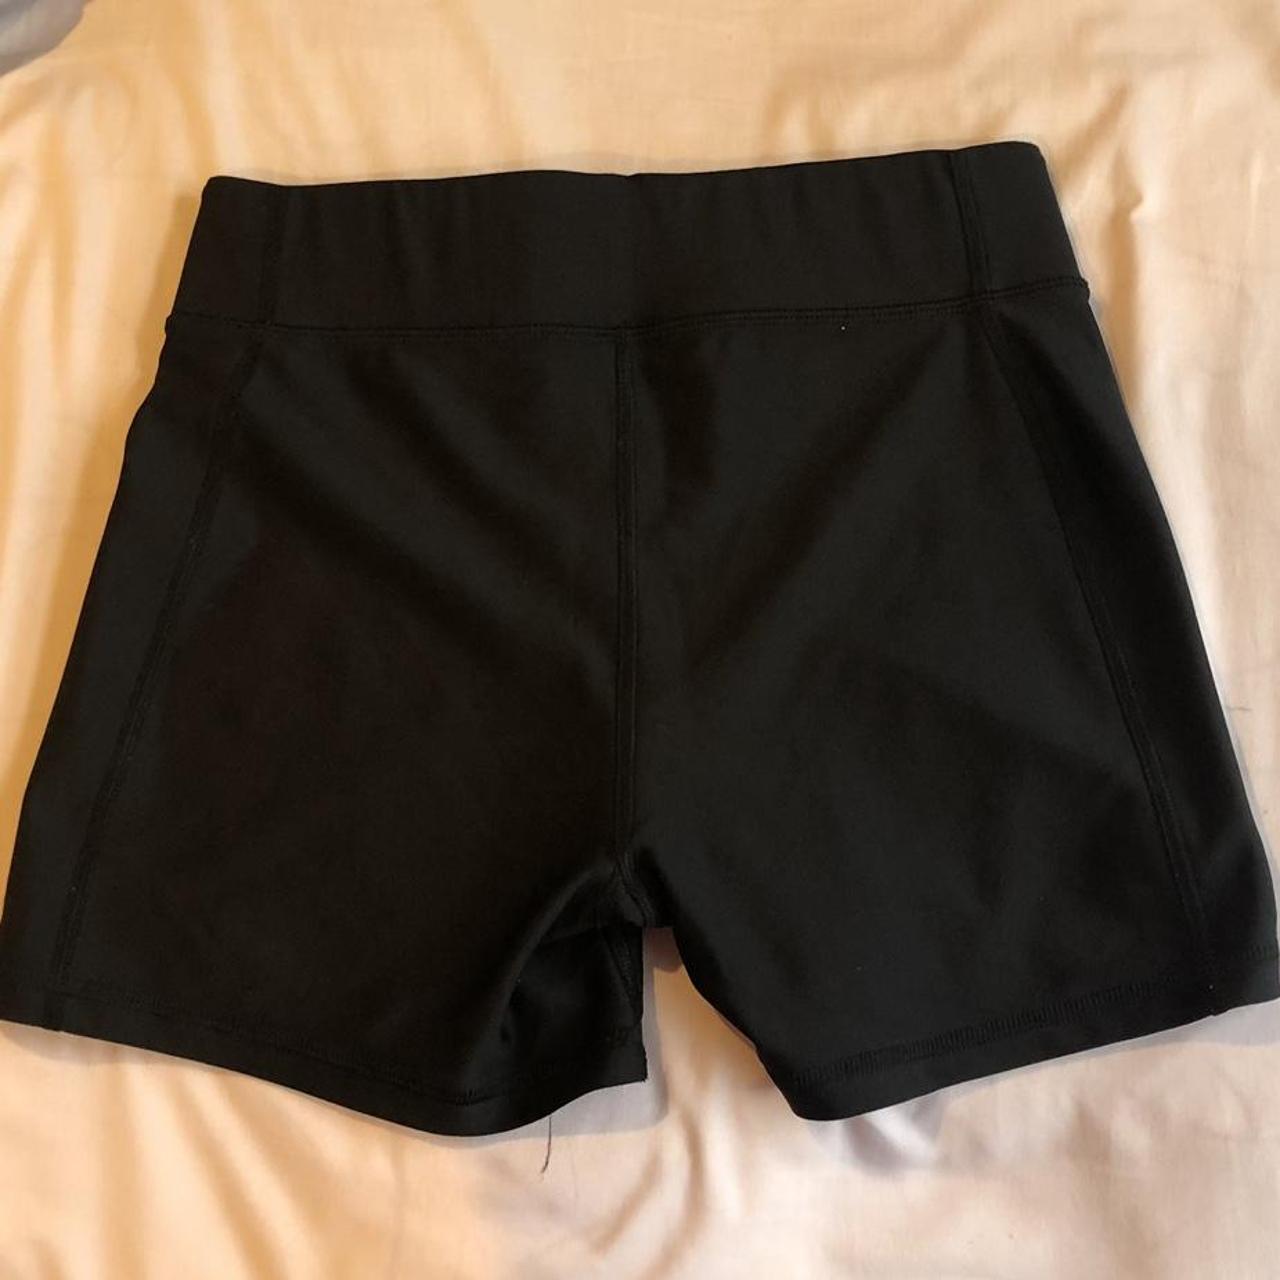 Black Under Armour Women’s Spandex Shorts, Only worn